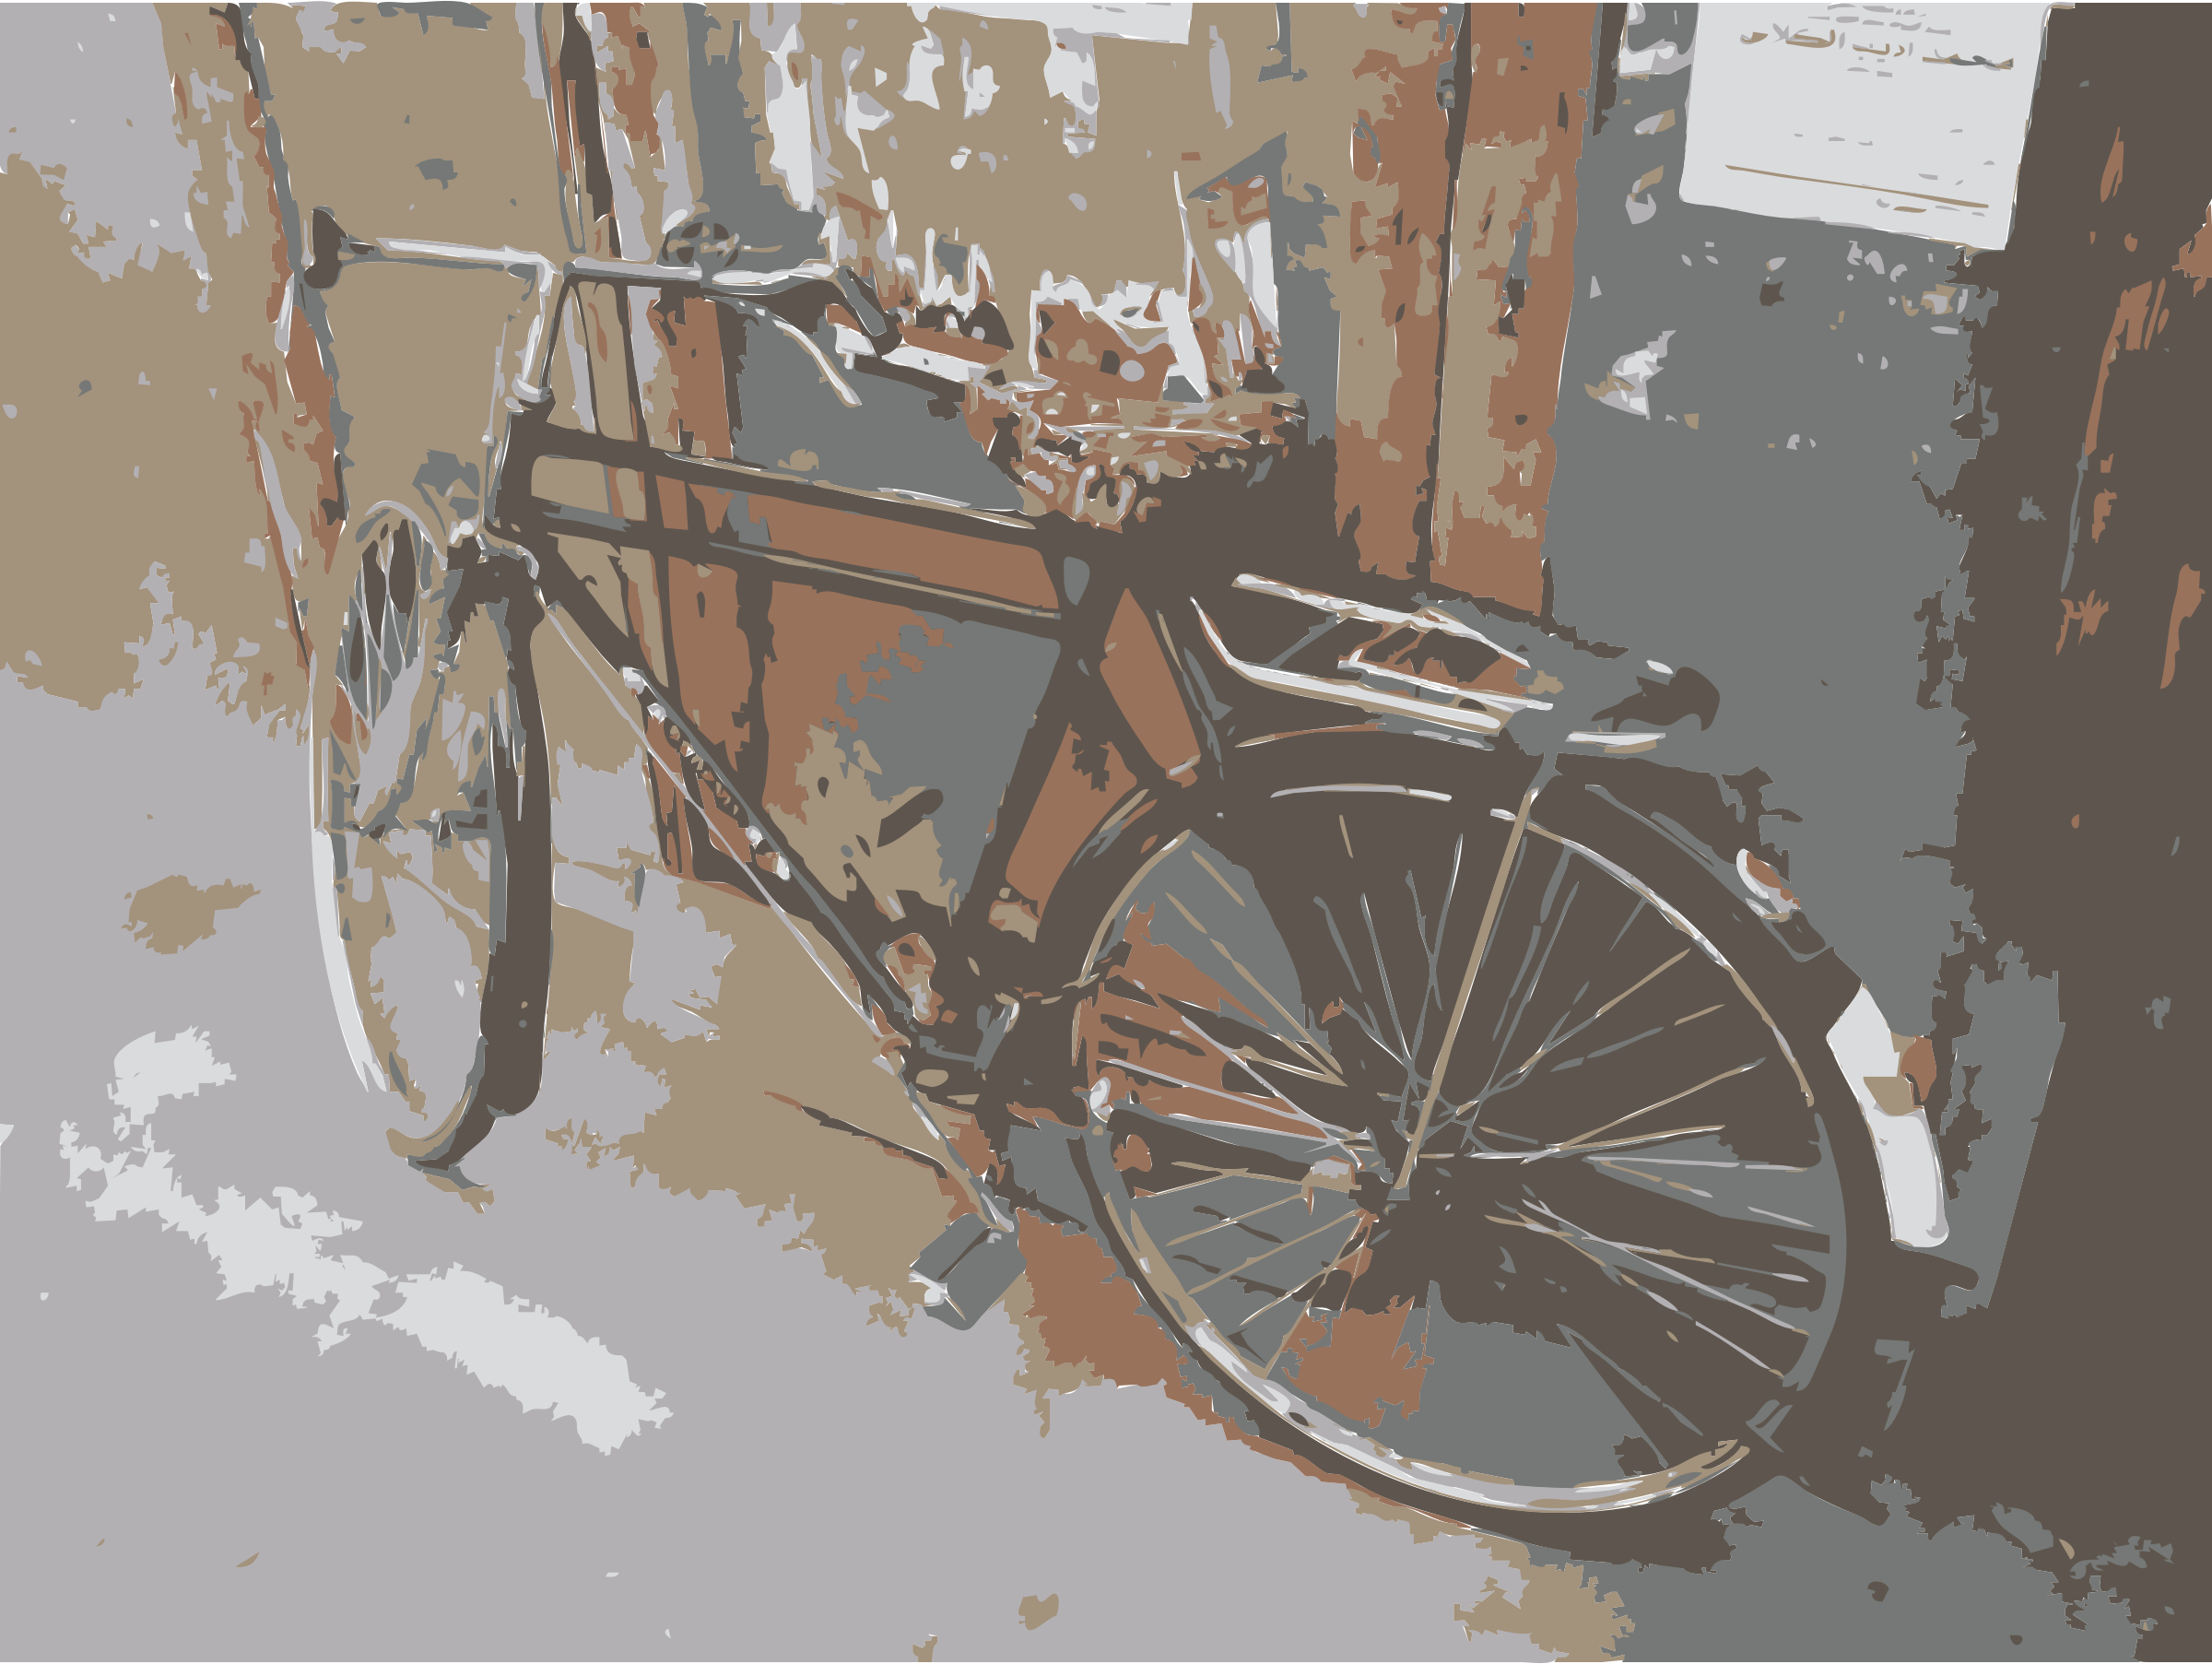 Chinese Bike Found in Damascus SVG Clip arts